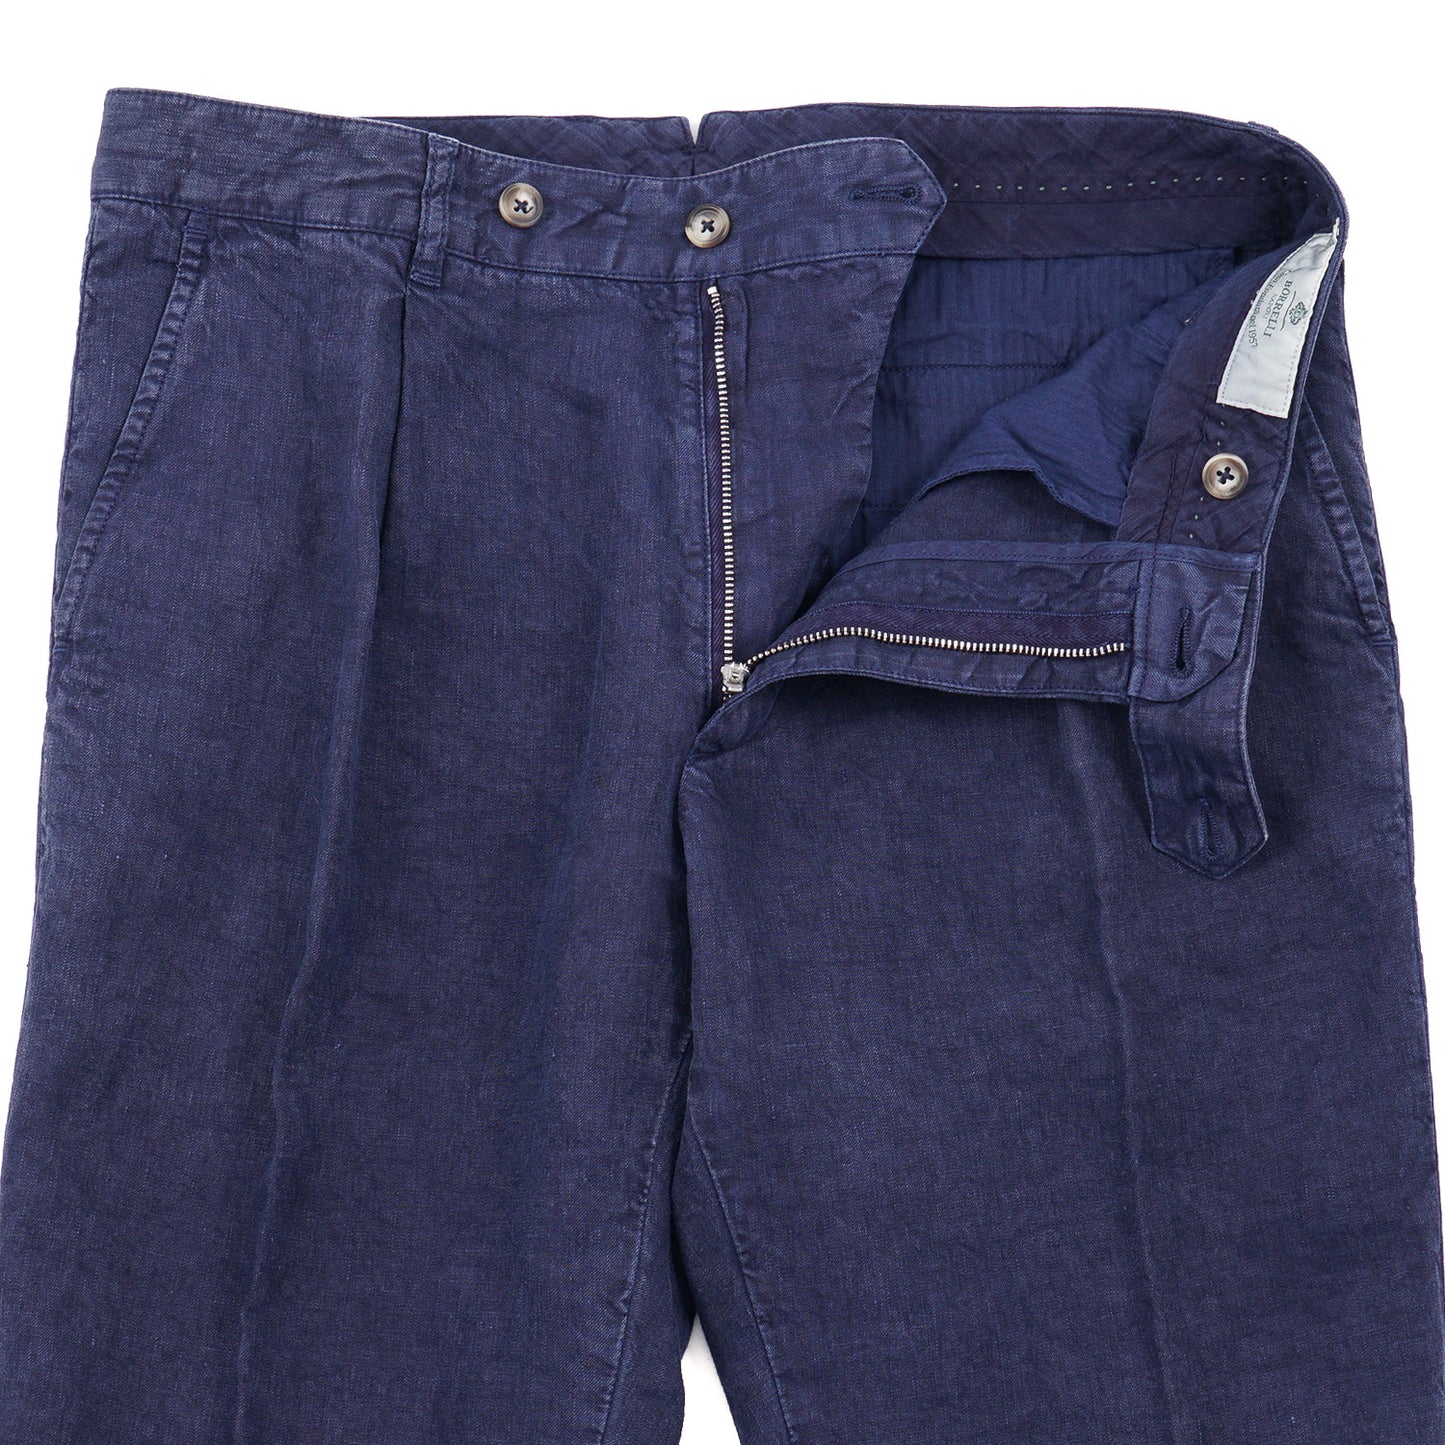 Luigi Borrelli Garment-Washed Linen Pants - Top Shelf Apparel